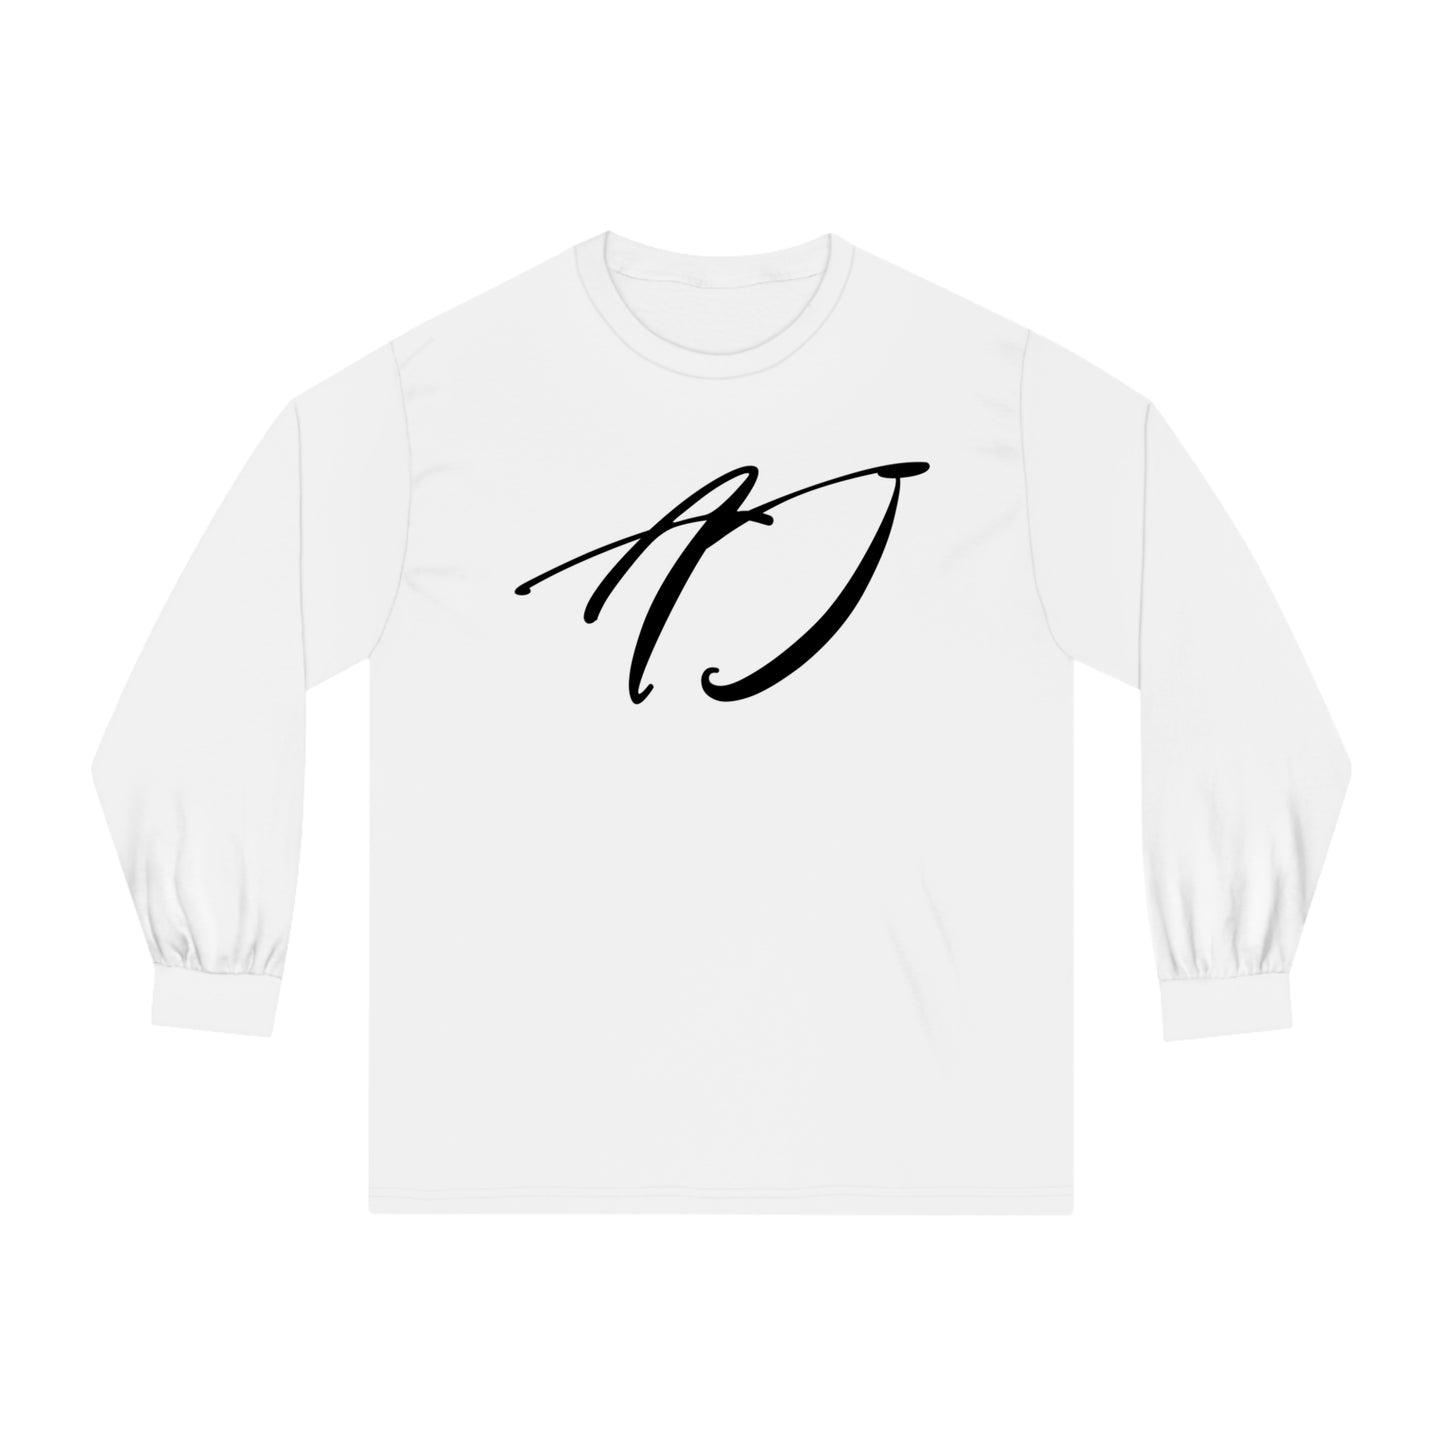 AJ Ocsona Classic Long Sleeve T-Shirt